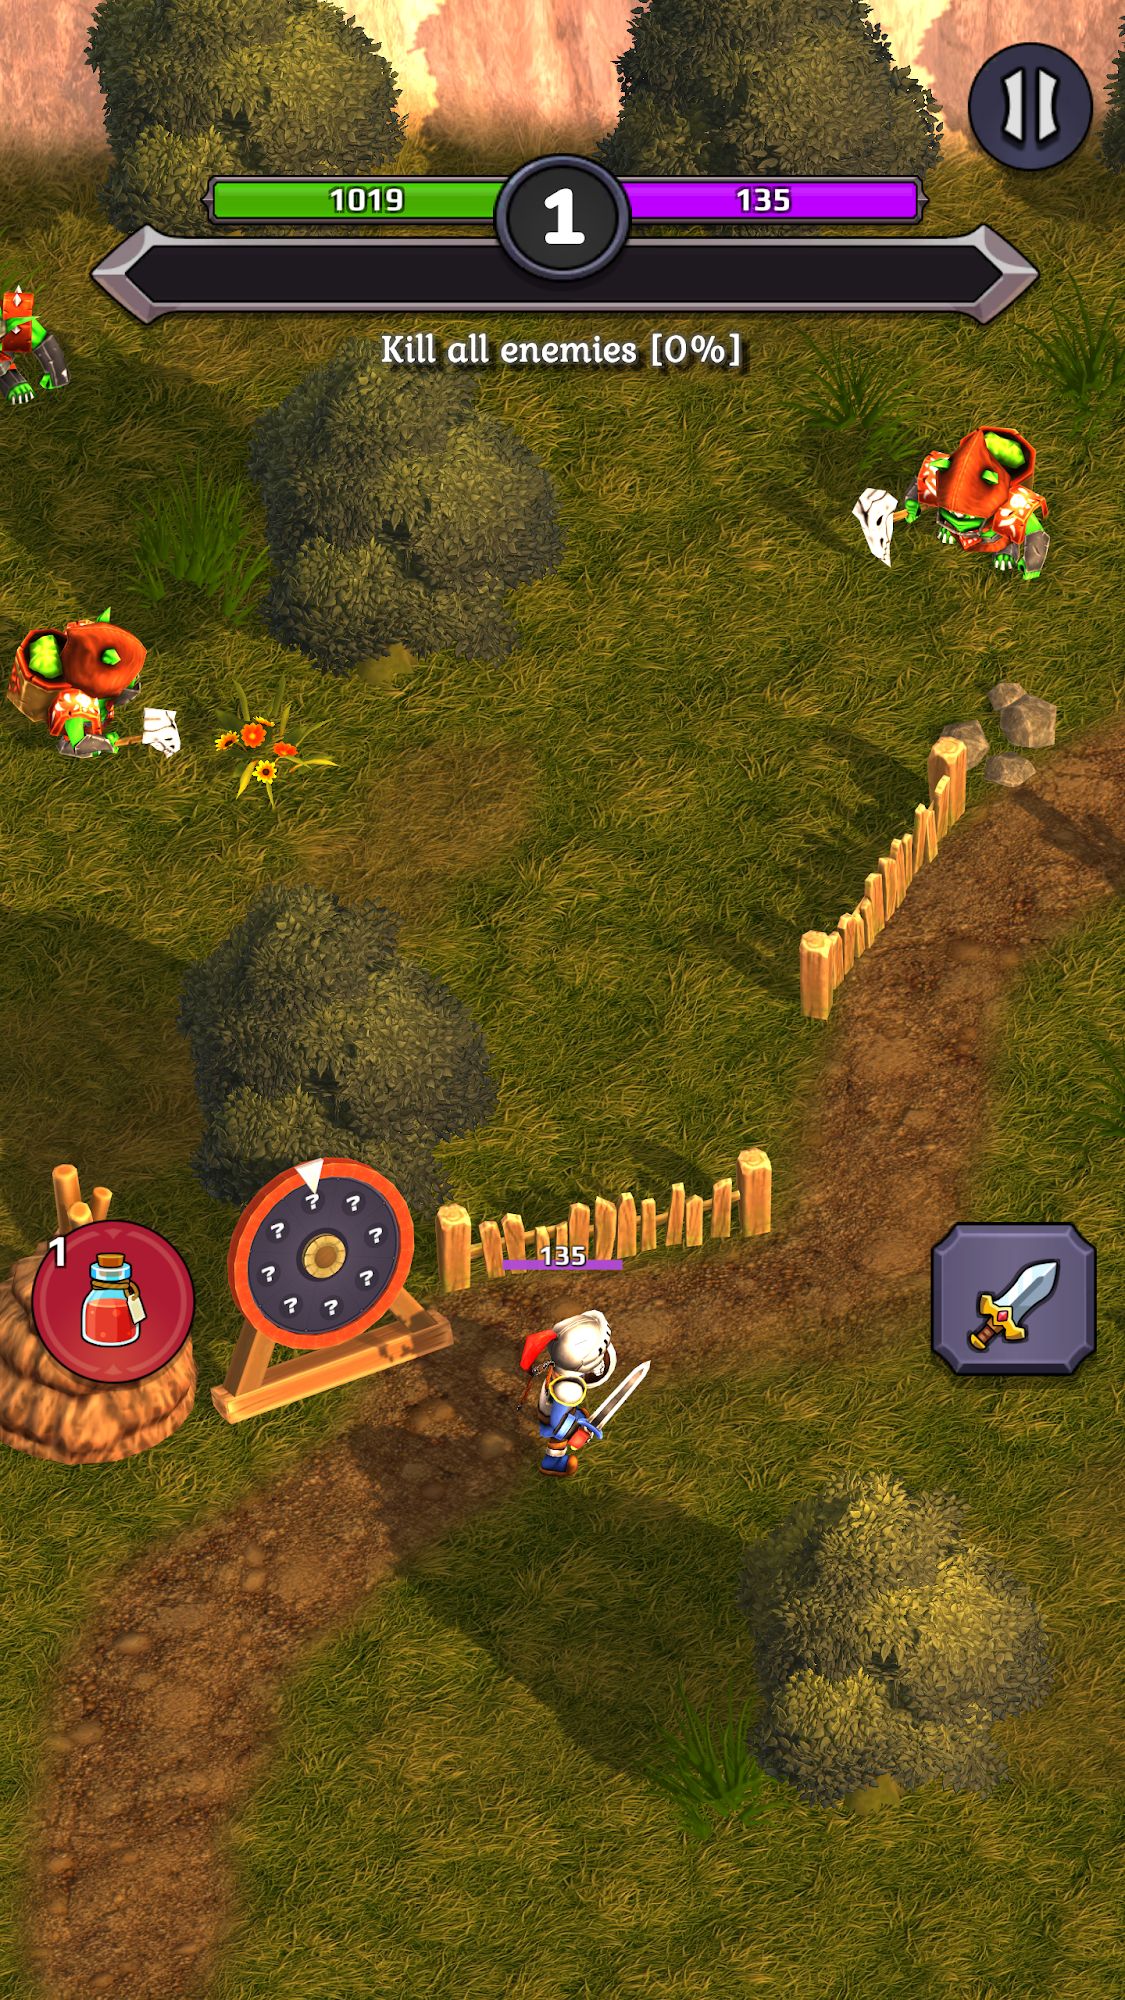 Скачать Crusado: Heroes Roguelike RPG: Android Фэнтези игра на телефон и планшет.